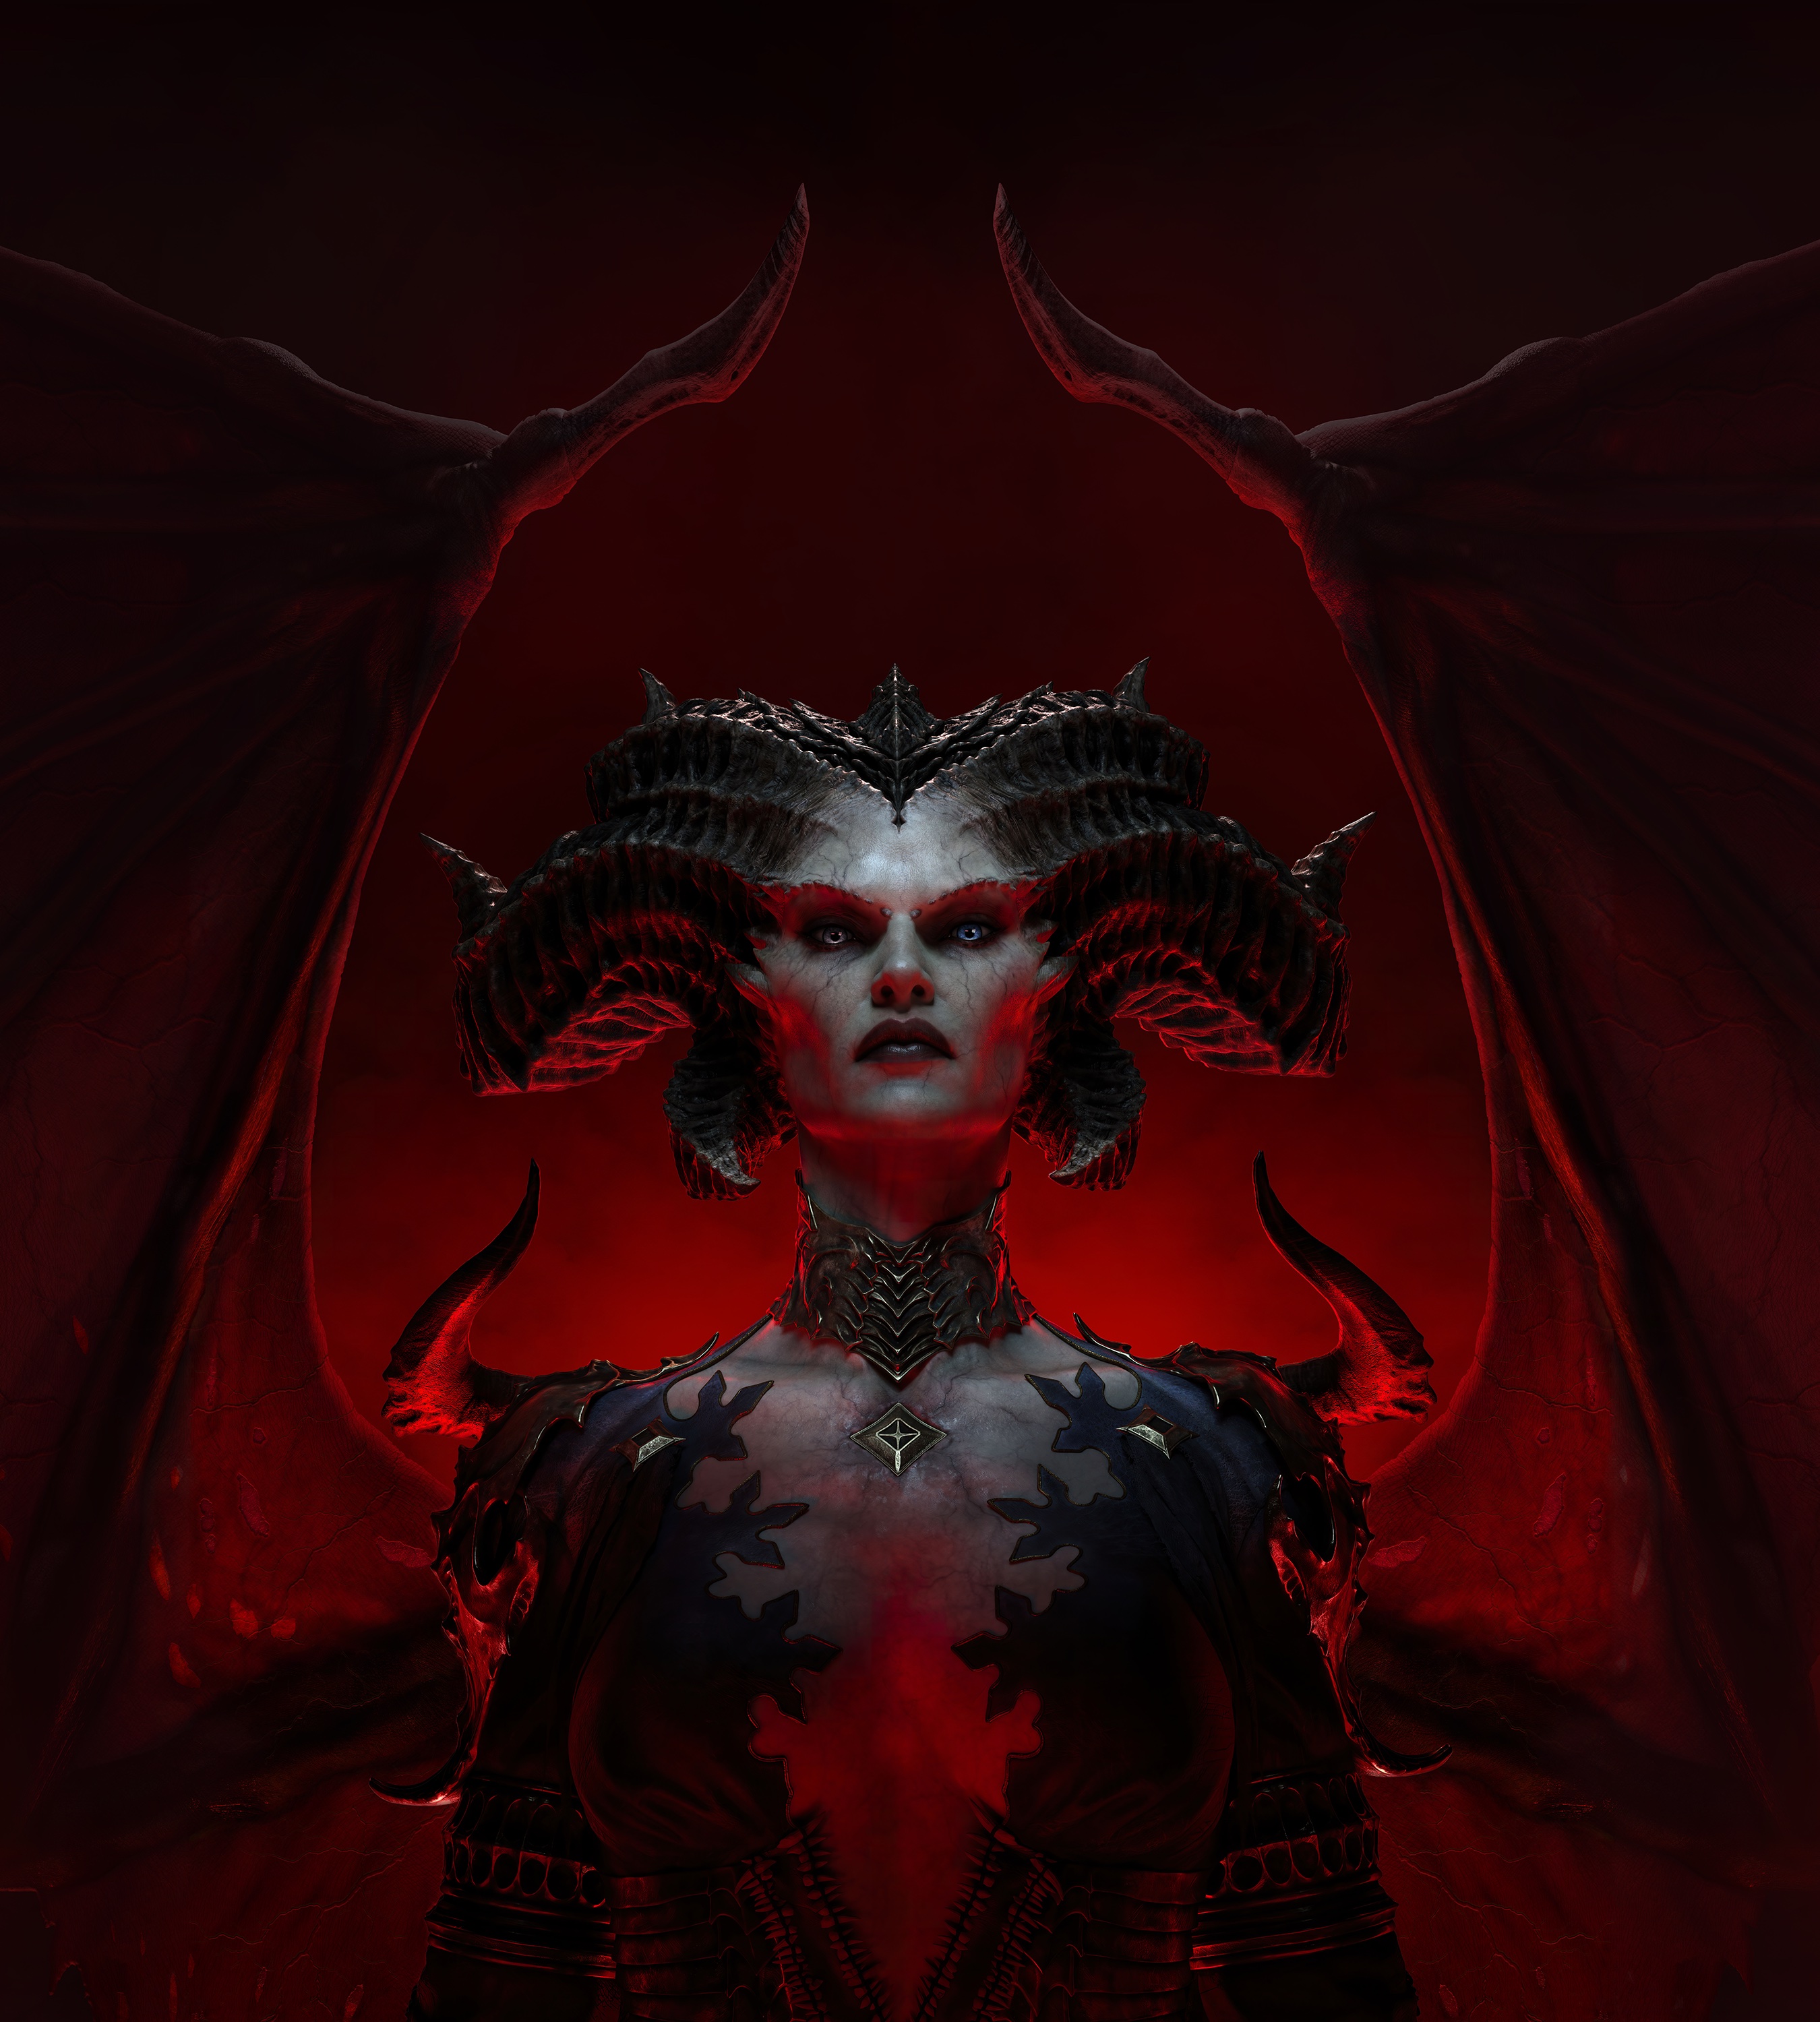 Diablo Immortal Guides Wiki page: 1